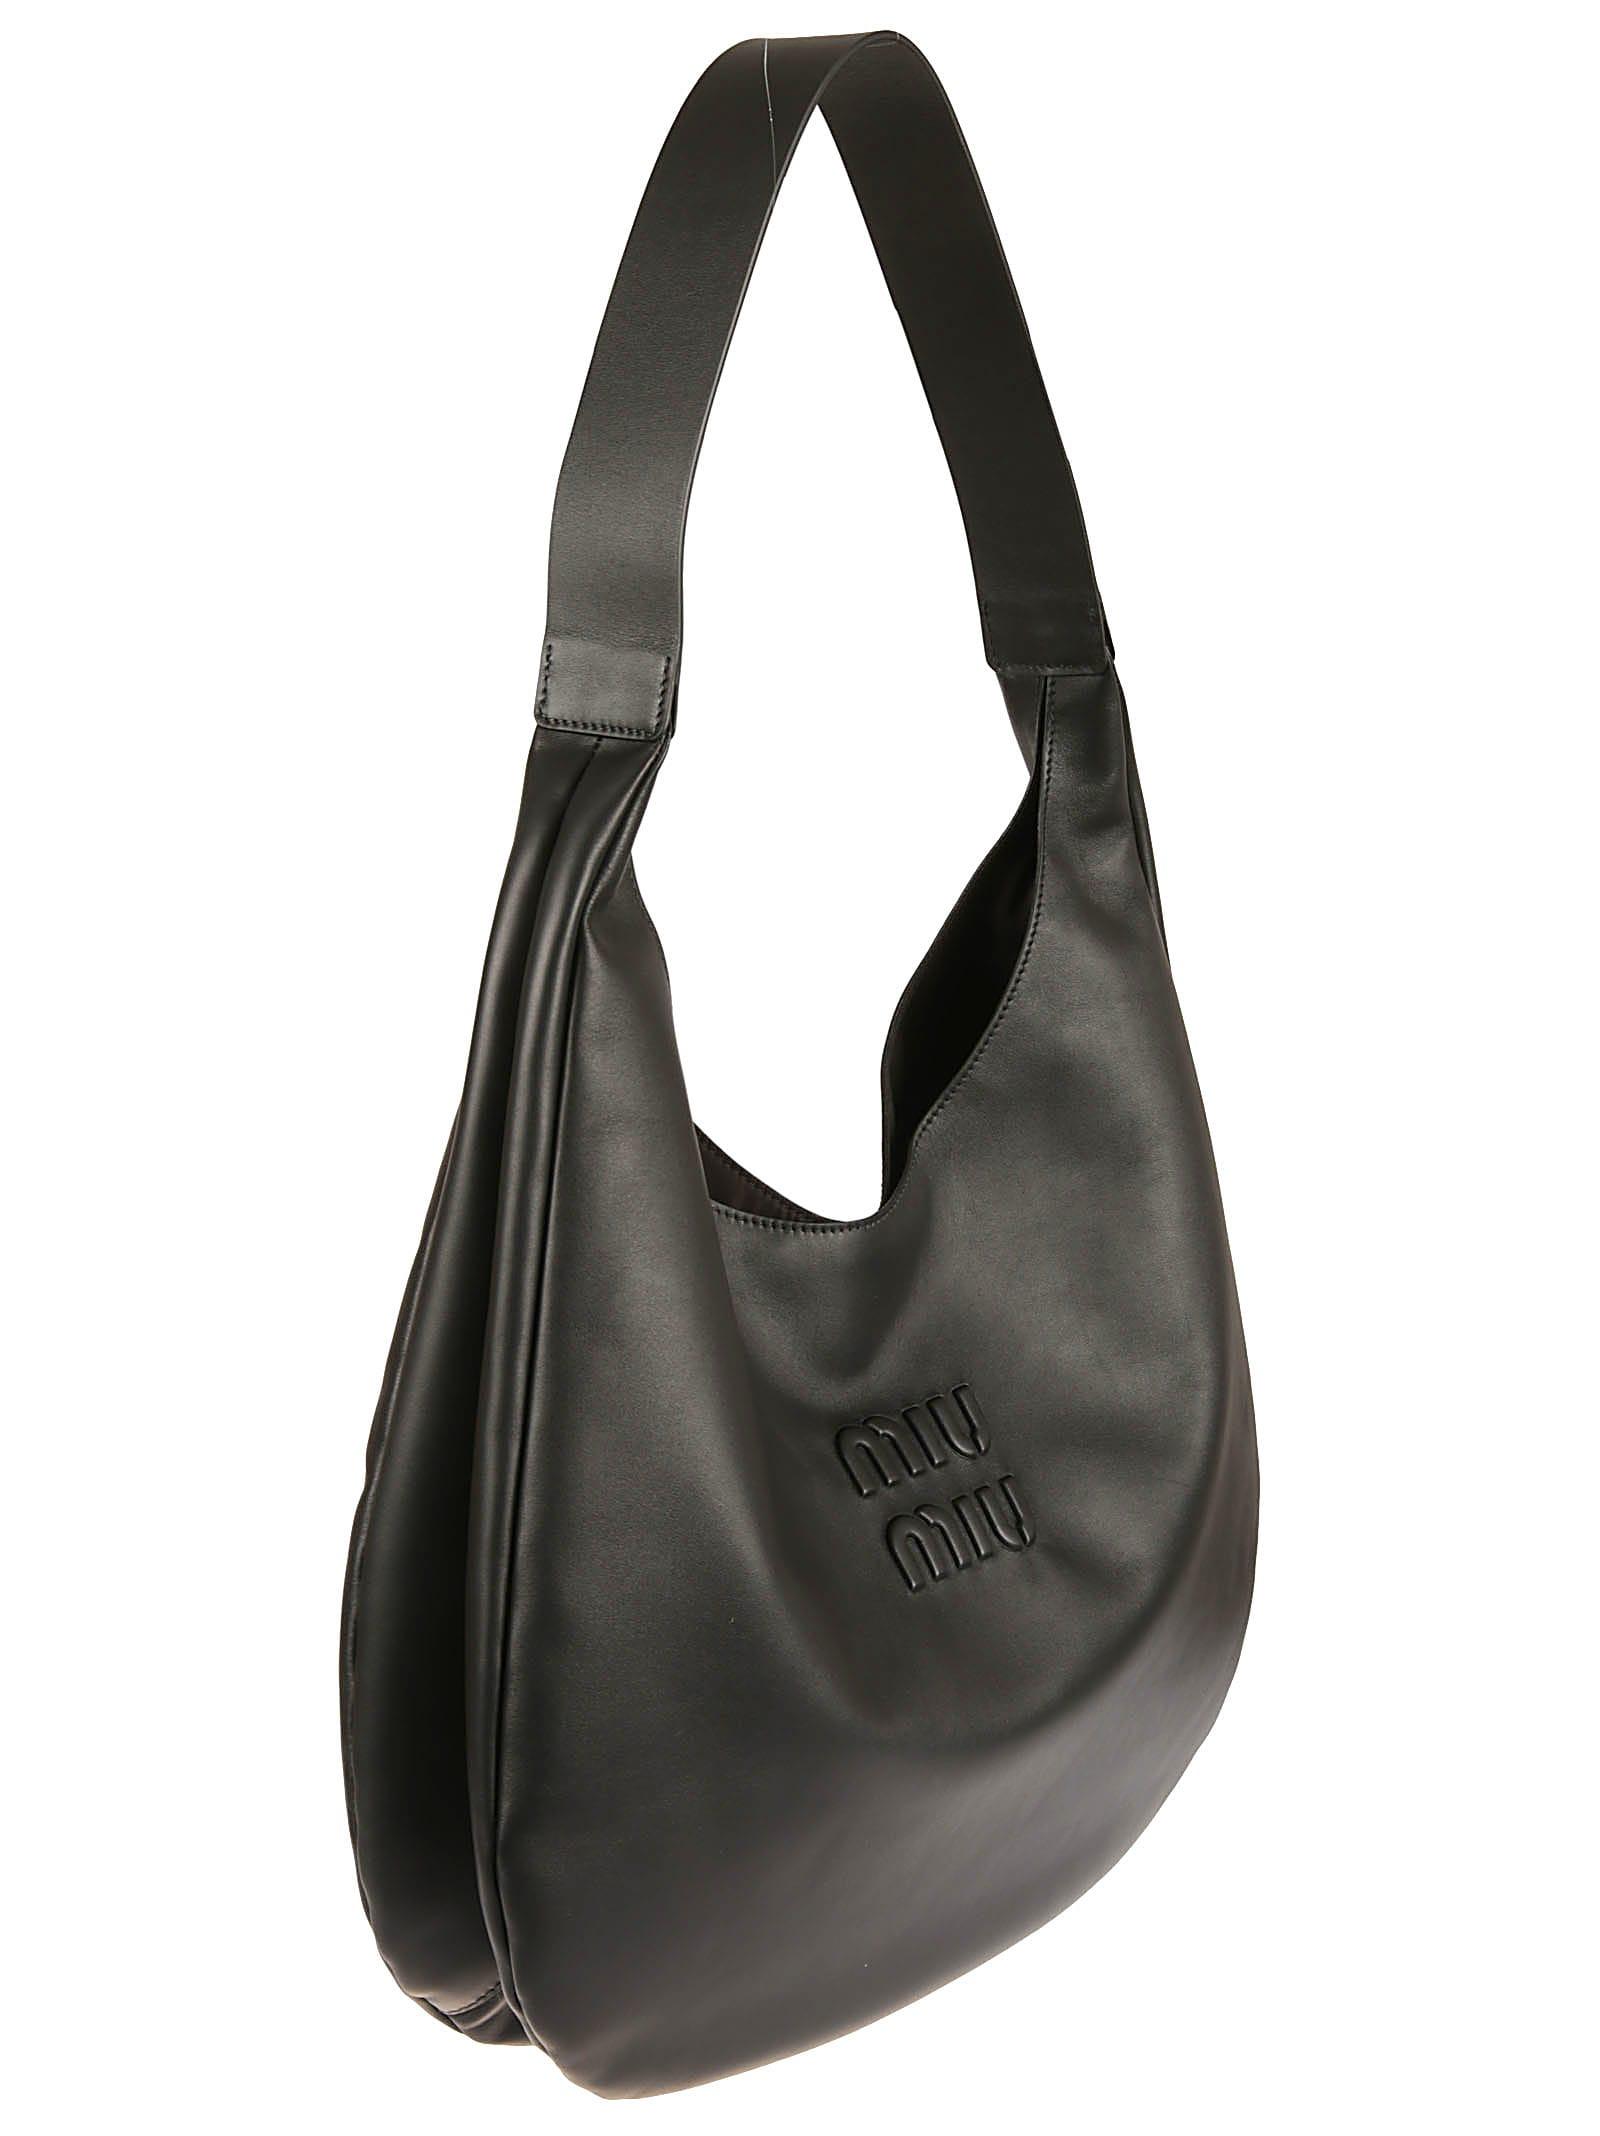 Miu Miu Softy Shoulder Bag in Black